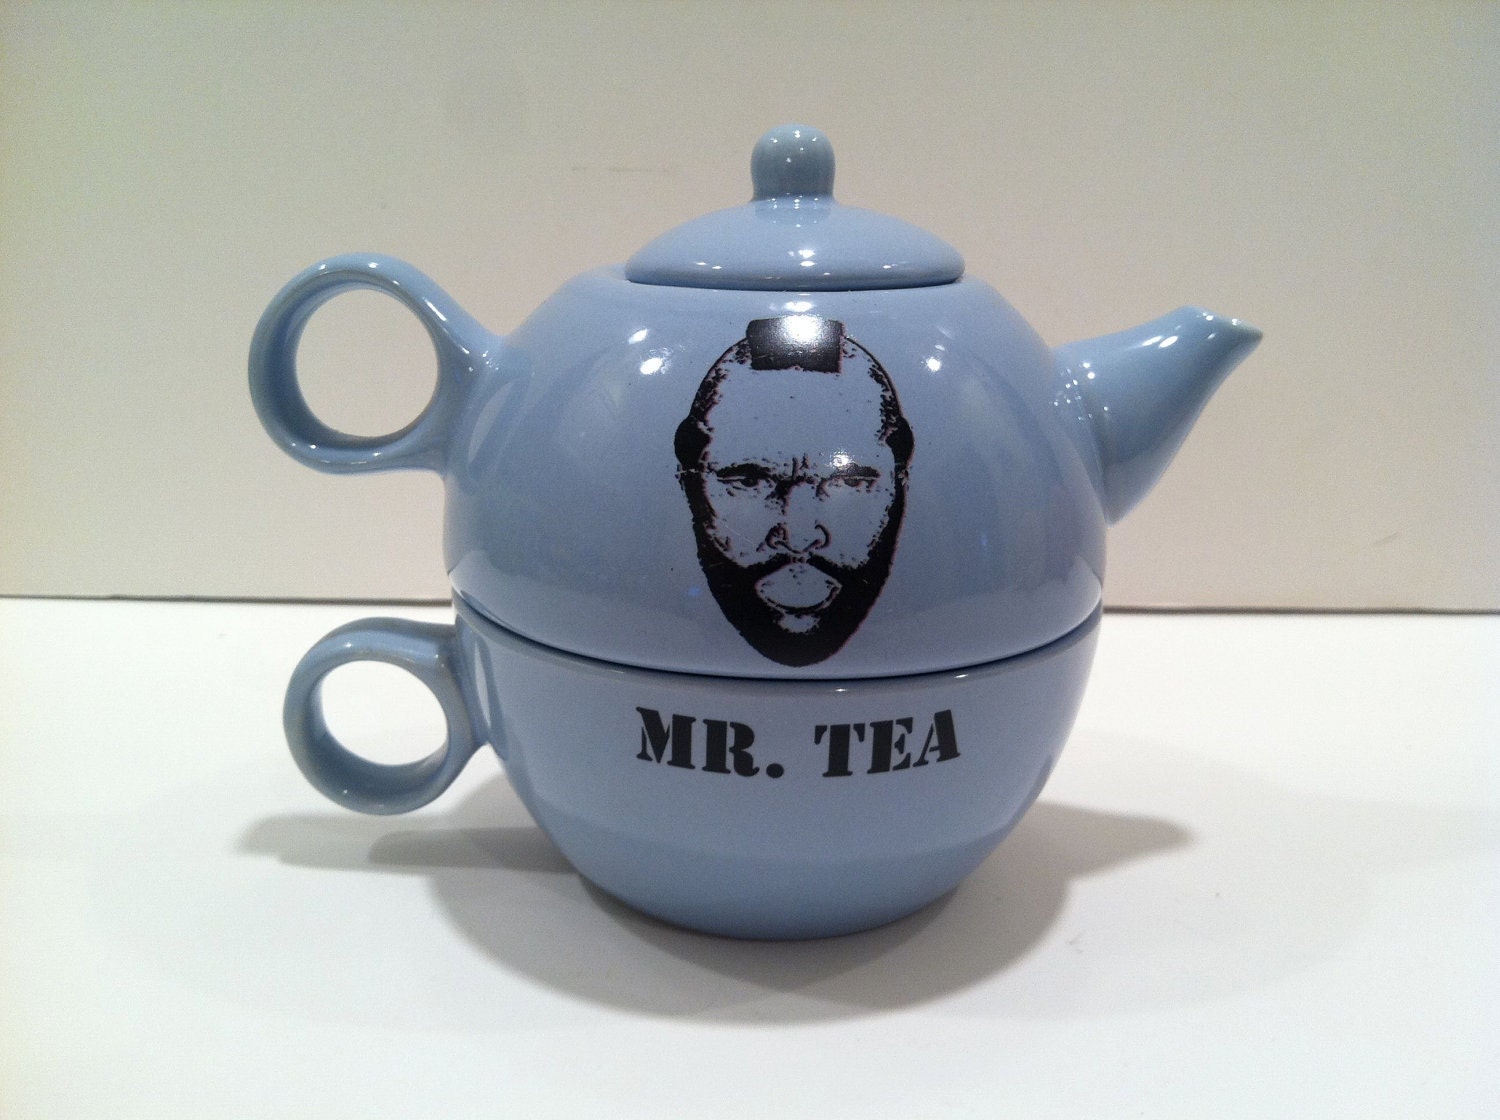 Mr. Tea teapot